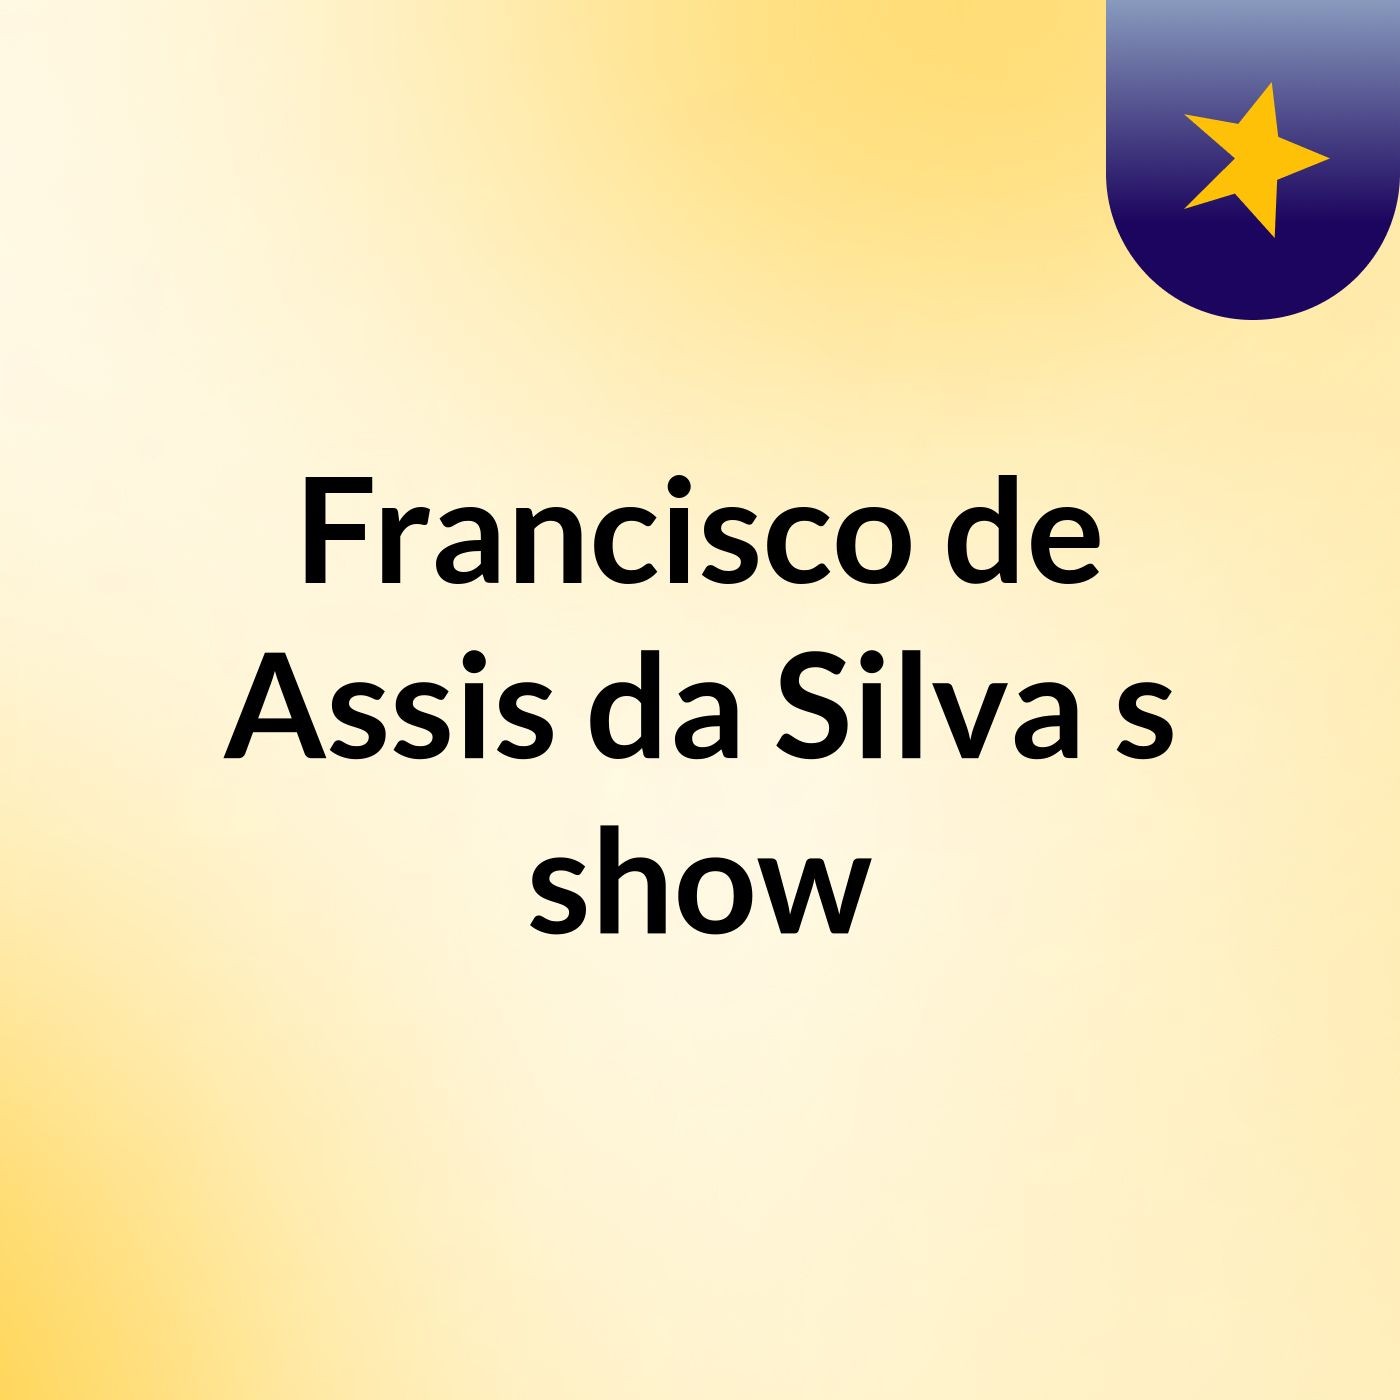 Francisco de Assis da Silva's show